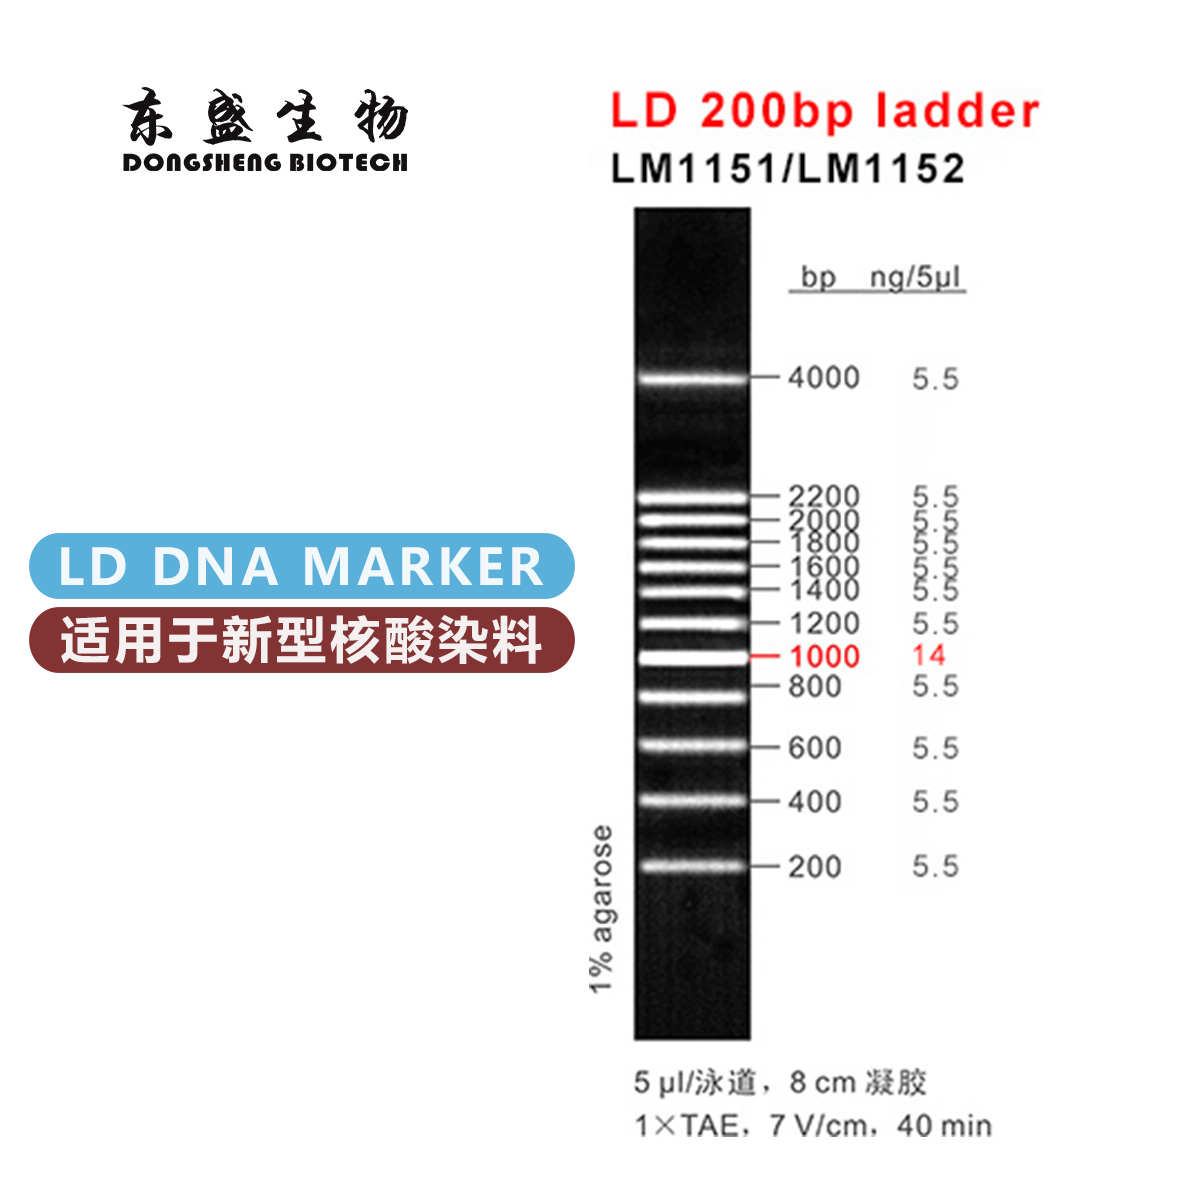 东盛LD 200bp ladder 新型染料专用DNA Marker (LM1151-LM1152)